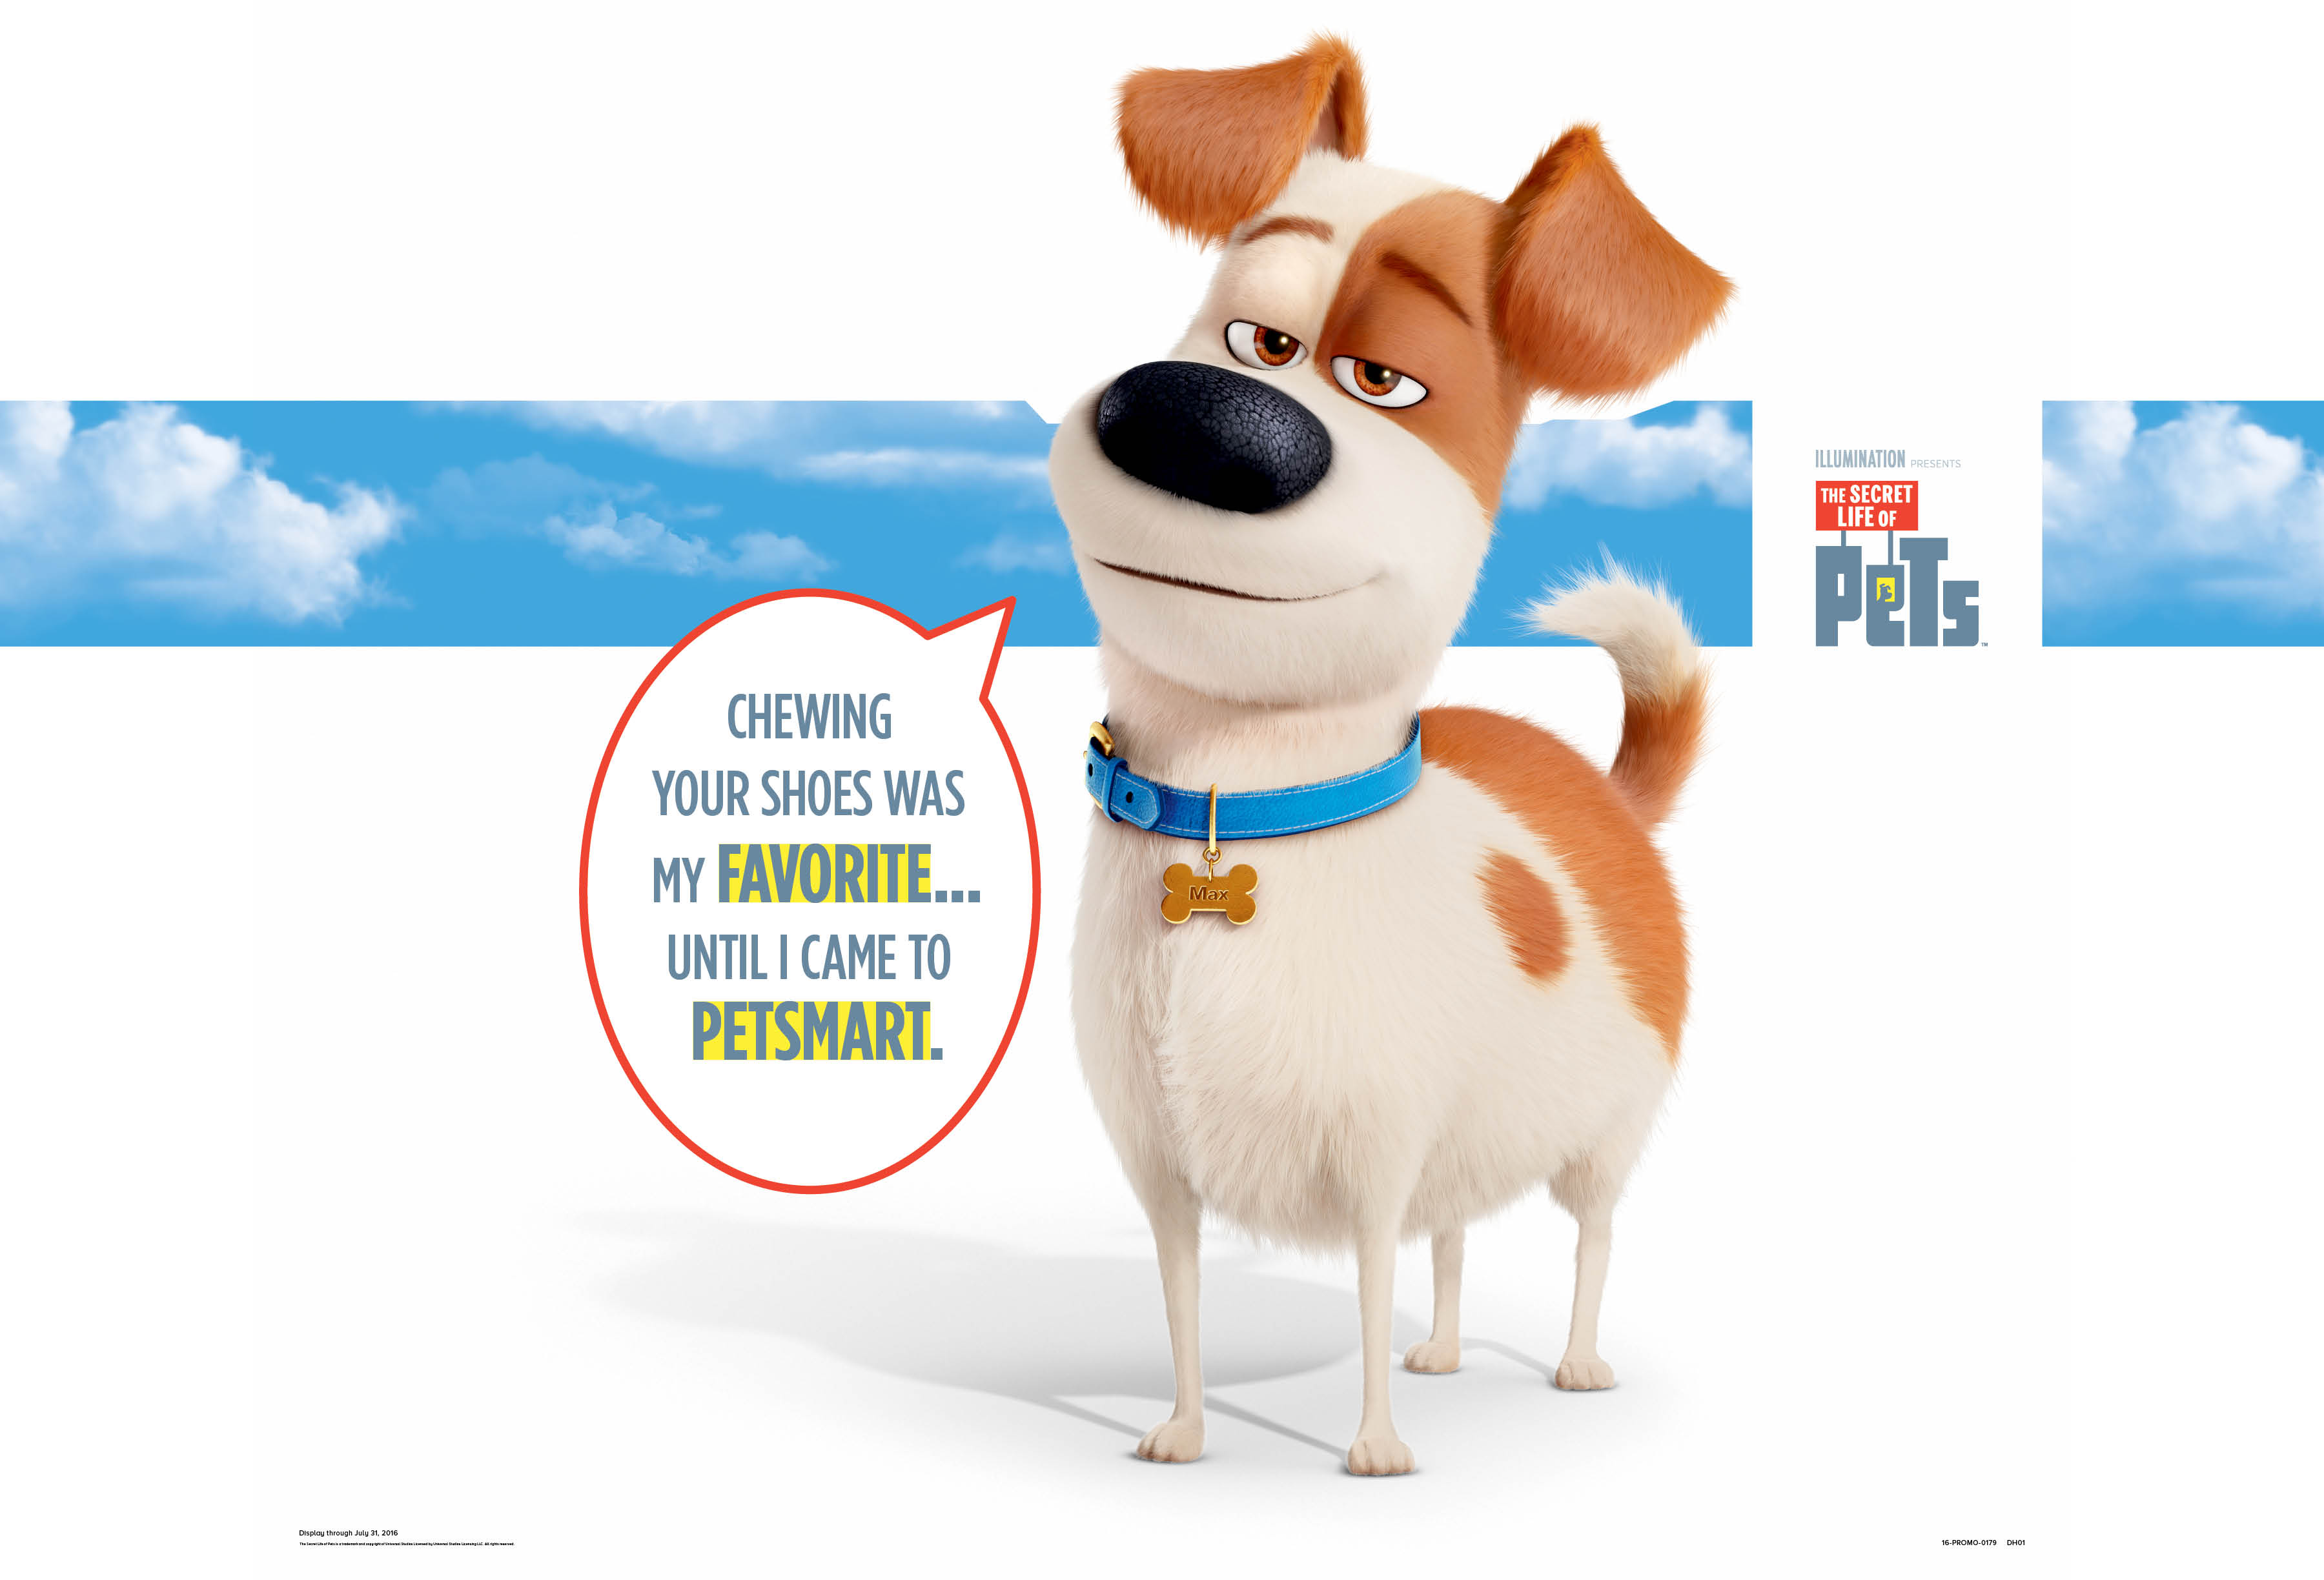 promo code for secret life of pets movie